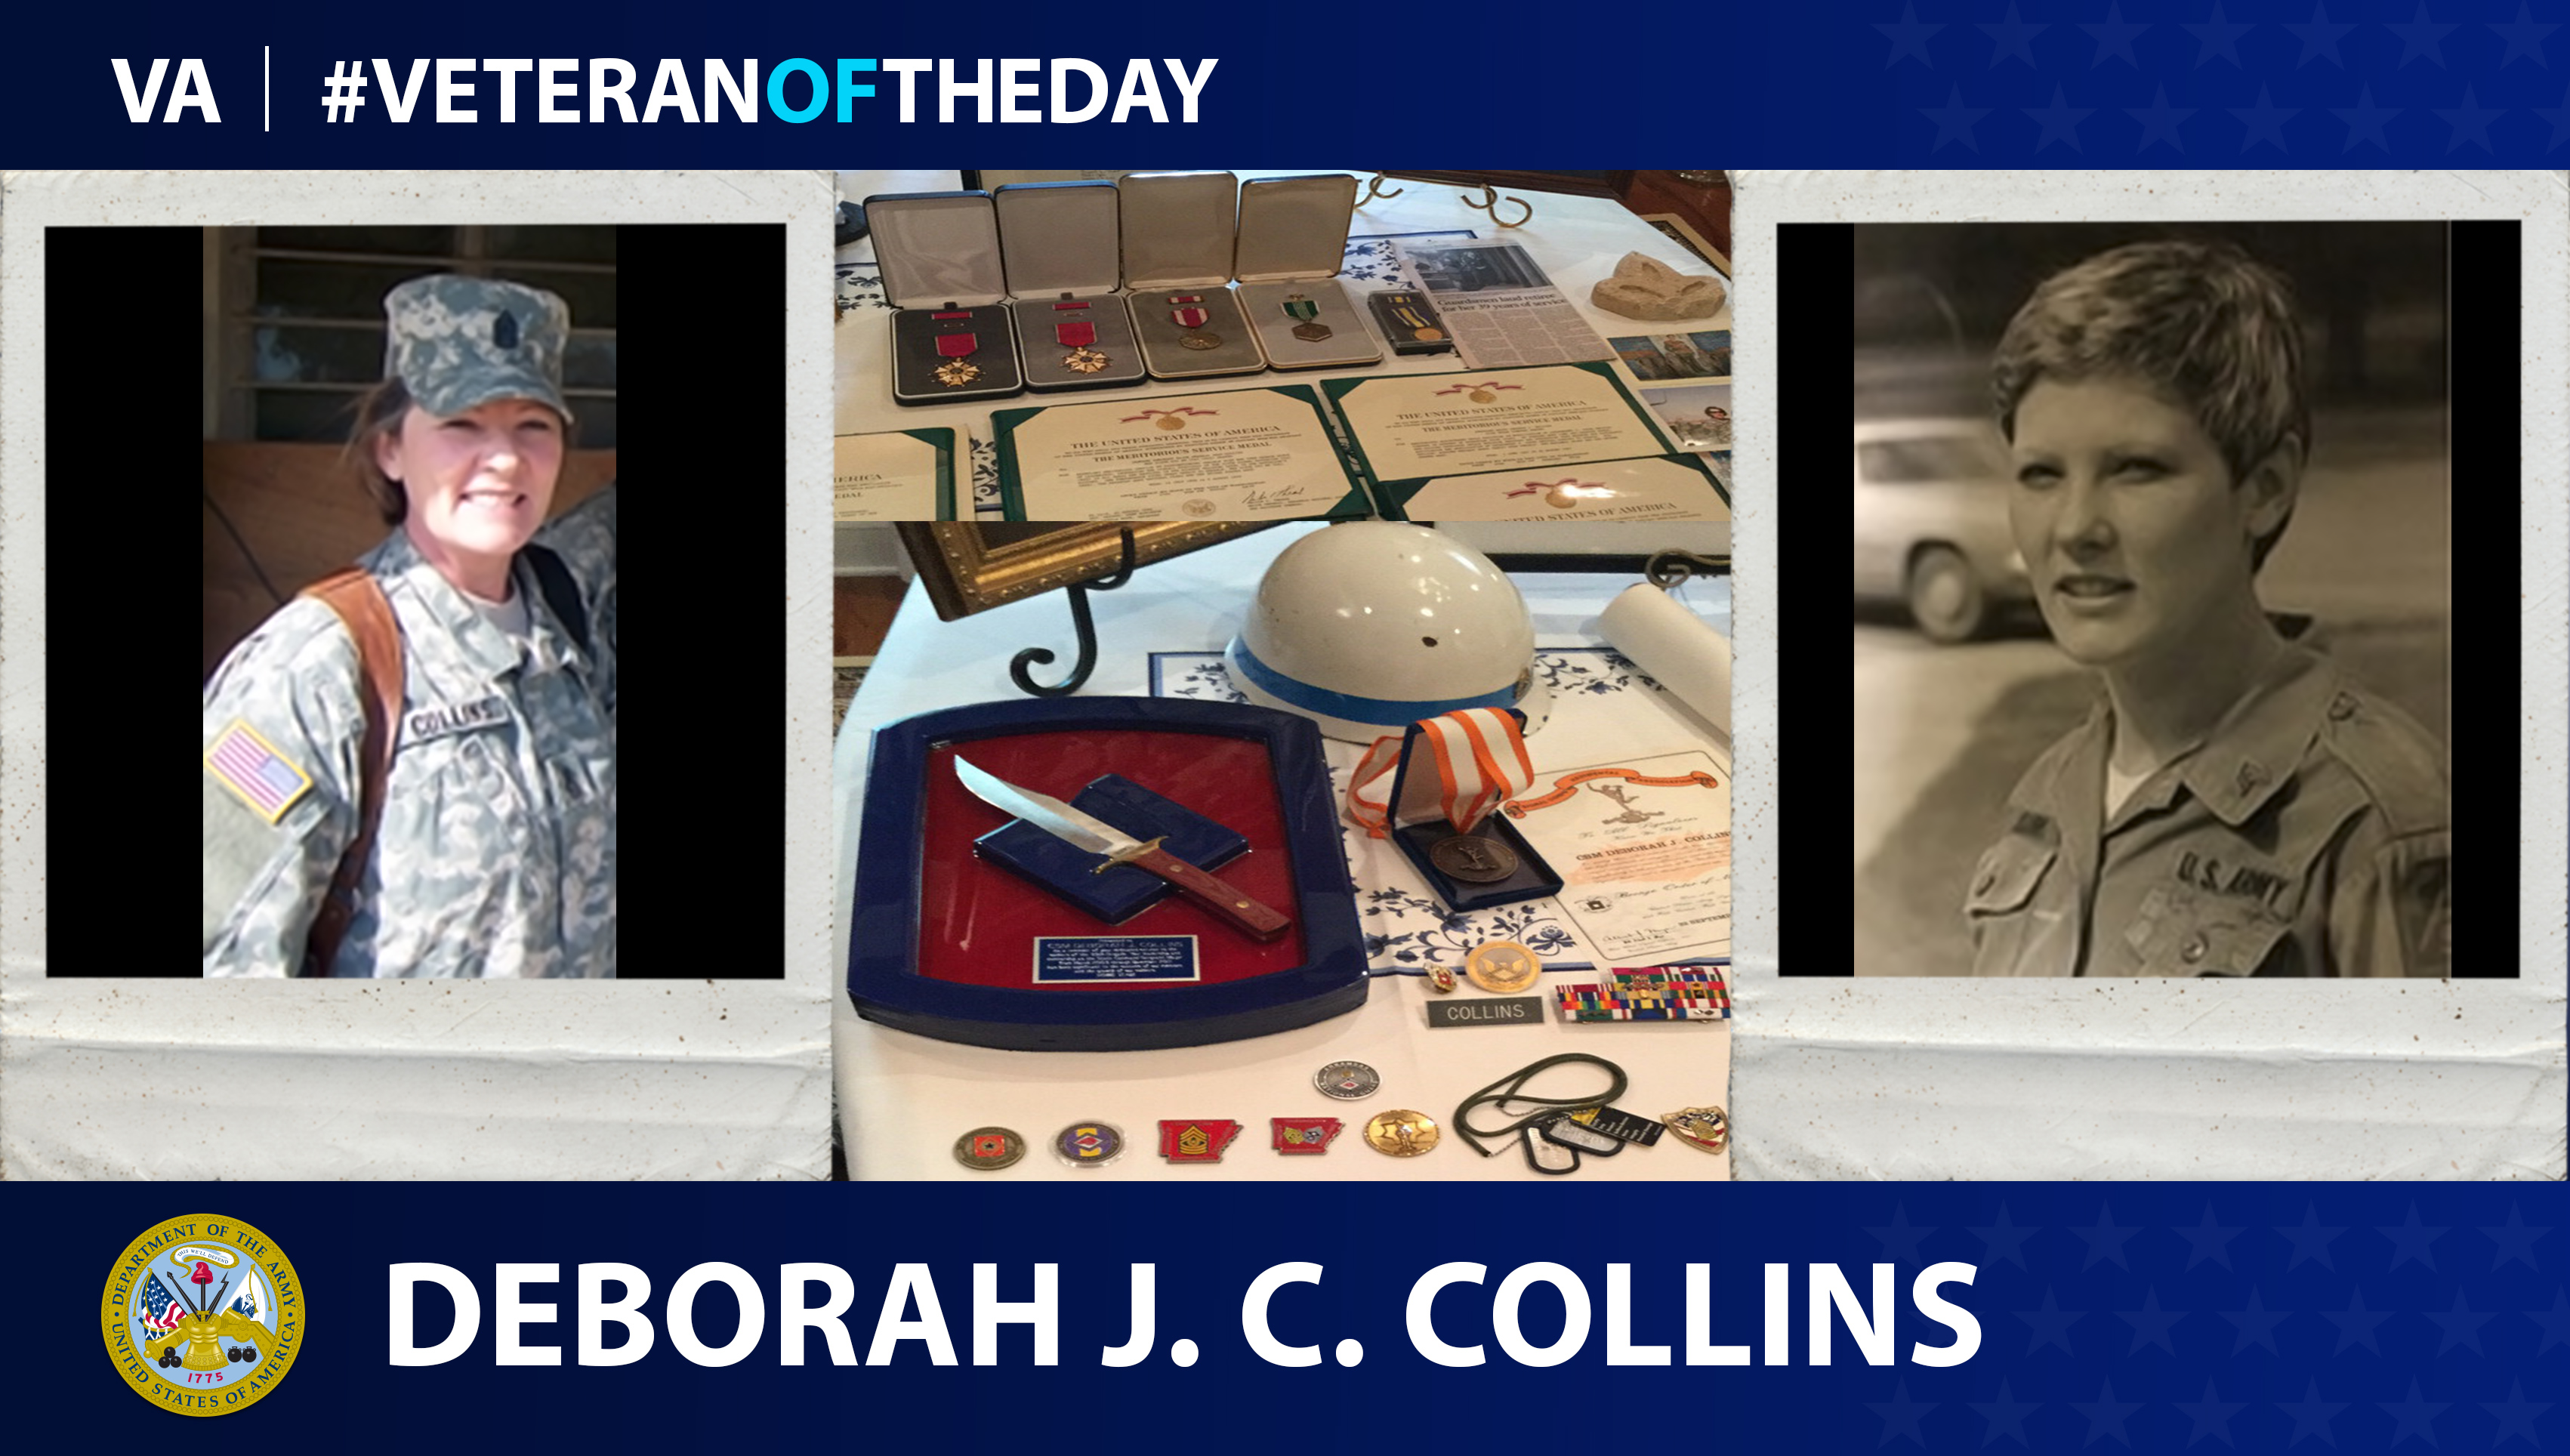 Army Veteran Deborah Jean Christian Collins is today's Veteran of the Day.